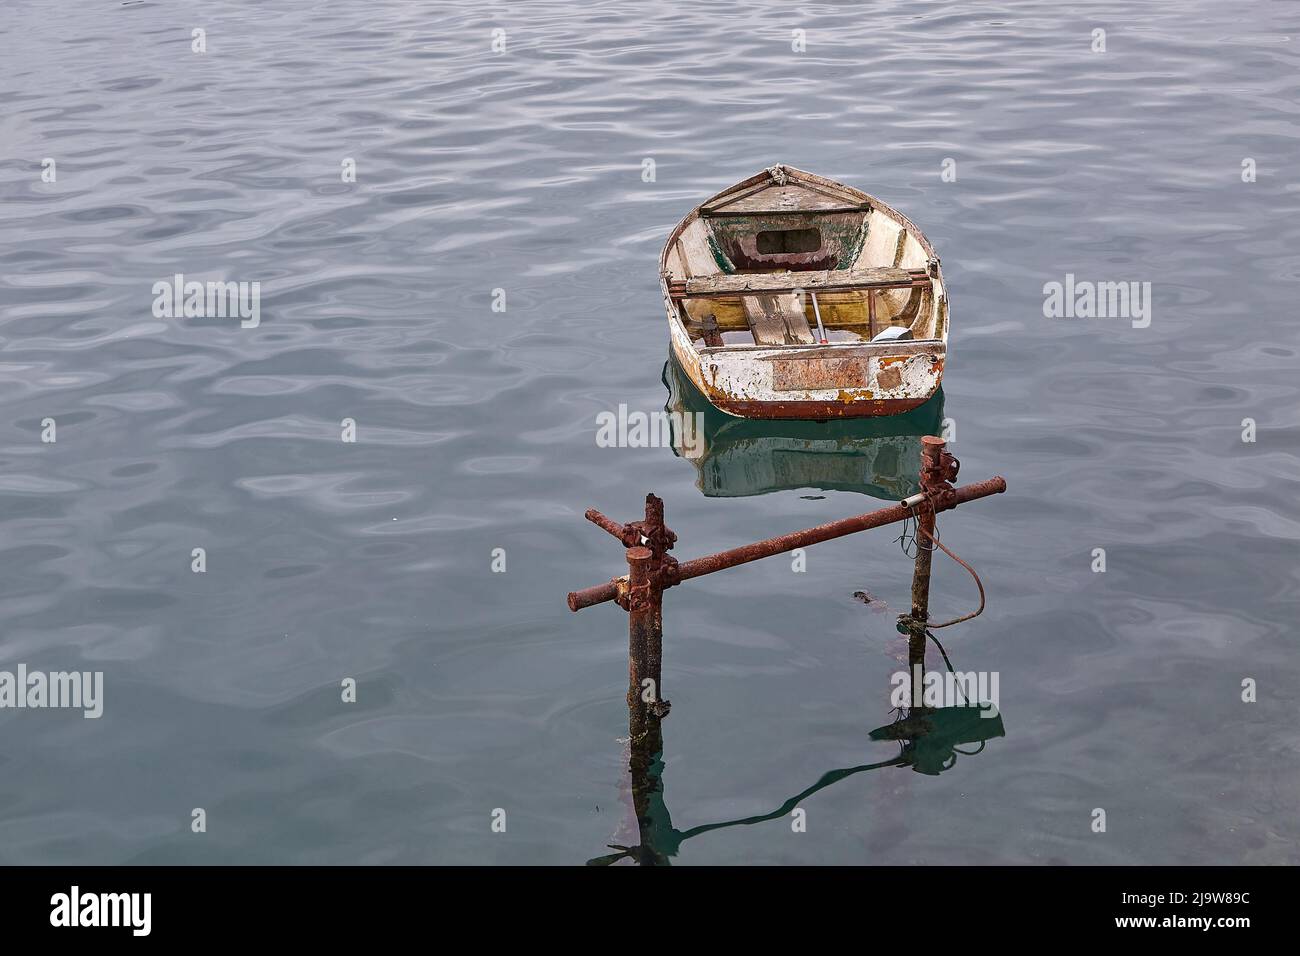 Barco de pesca en el mar Foto de stock